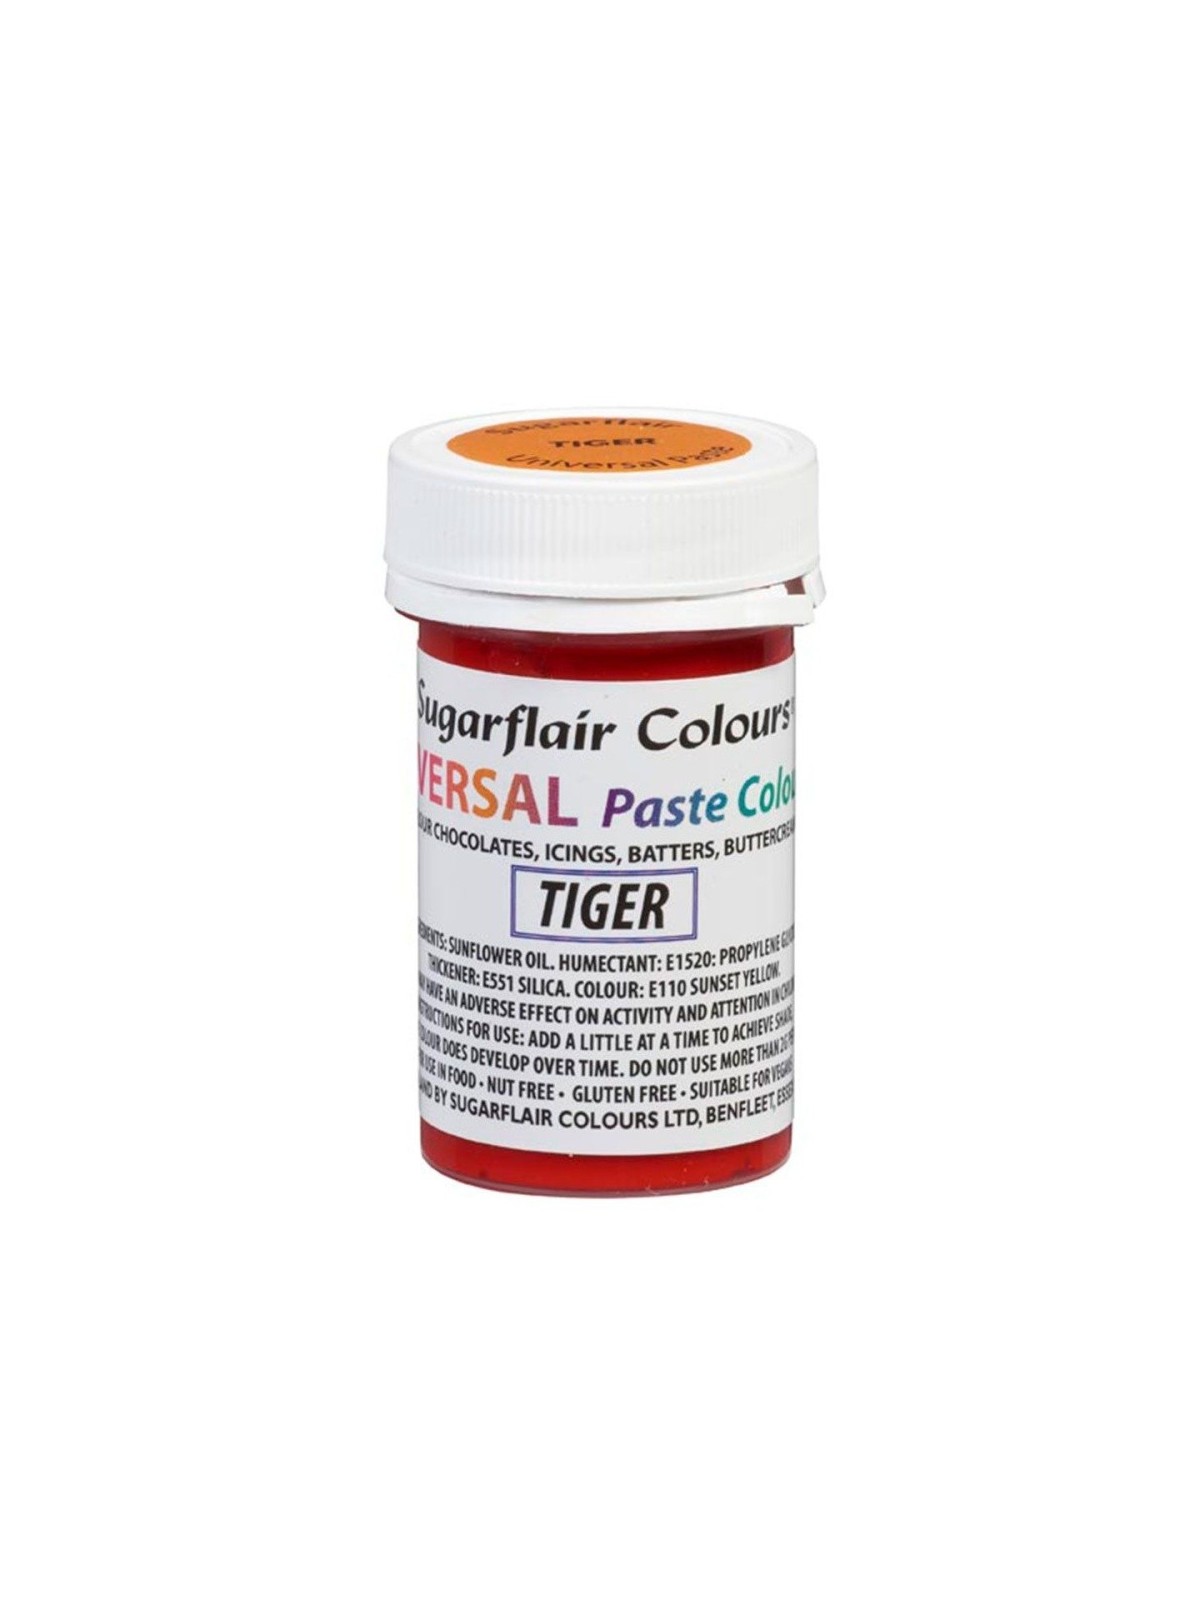 Sugarflair Universal gel color - Tiger  - 22g